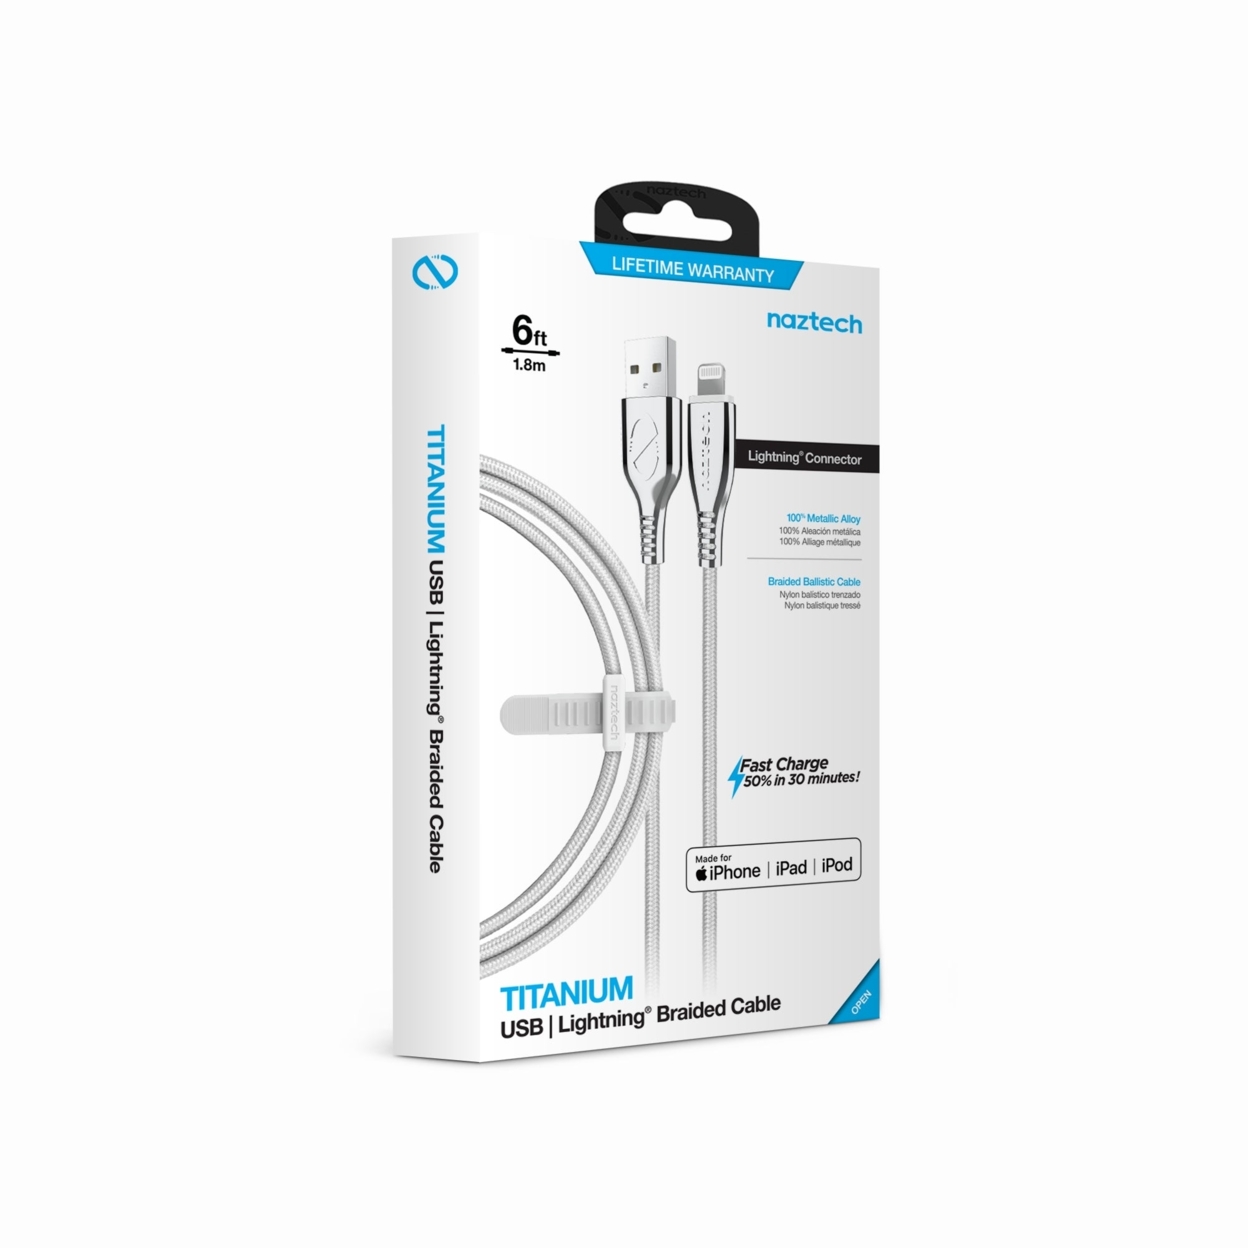 Naztech Titanium USB To MFi Lightning Braided Cable 6ft - White